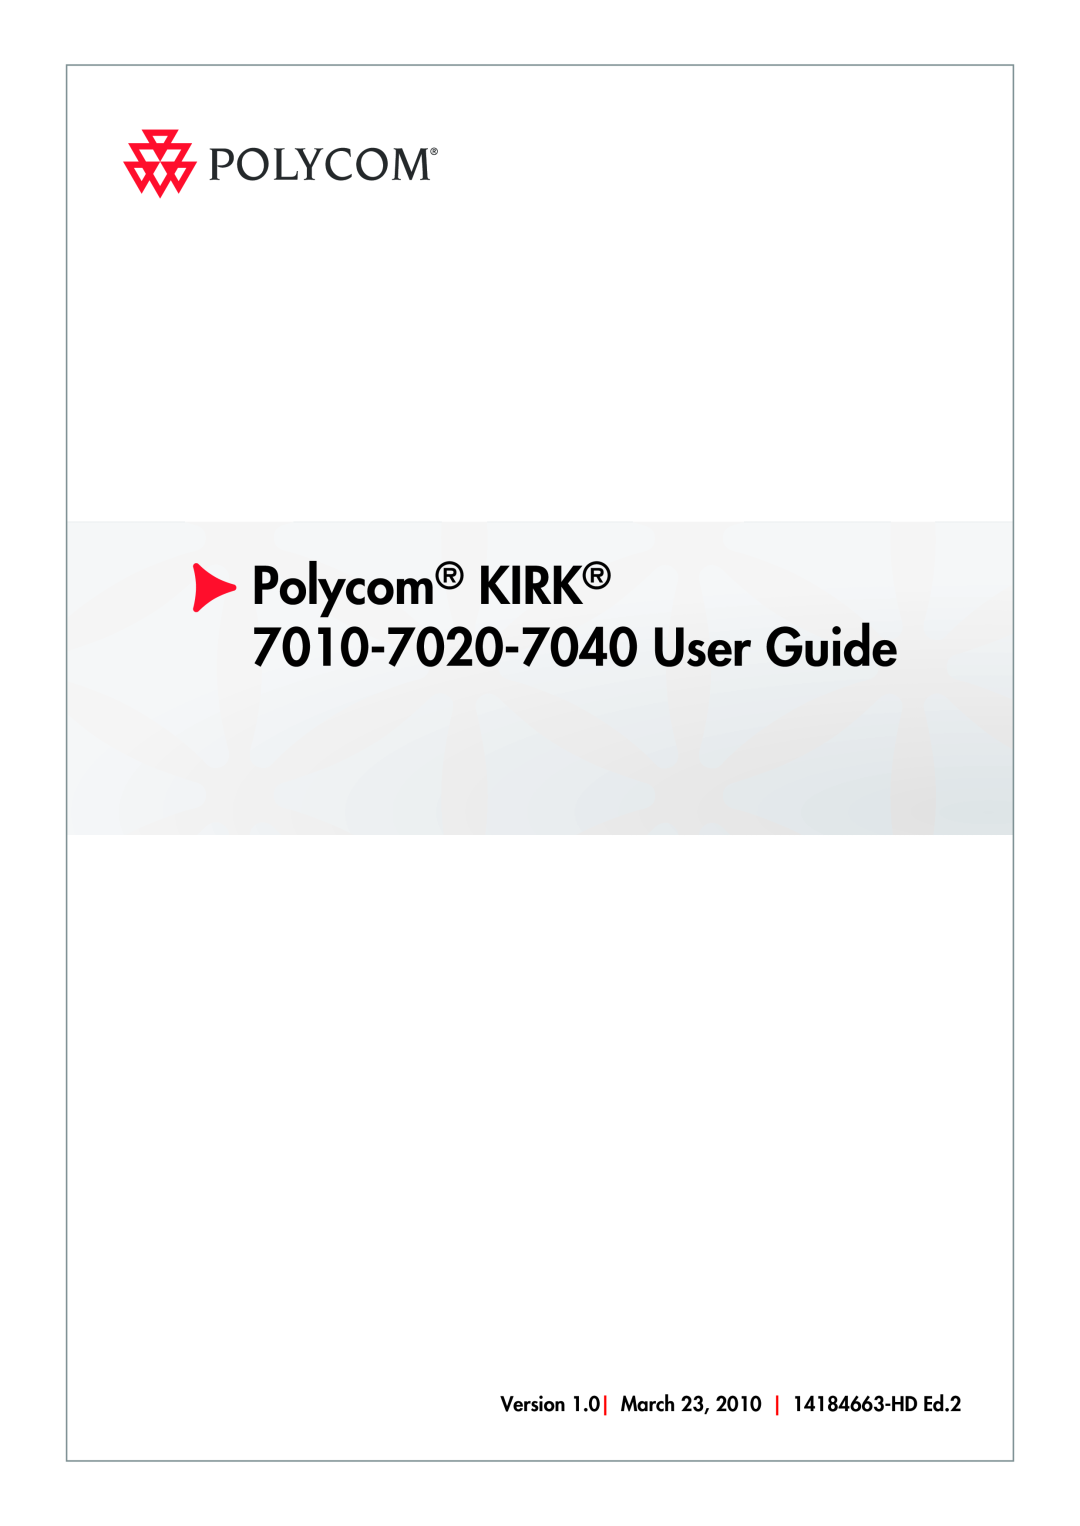 Polycom manual Polycom KIRK 7010-7020-7040 User Guide, Version 1.0 March 23, 2010 14184663-HD Ed.2 